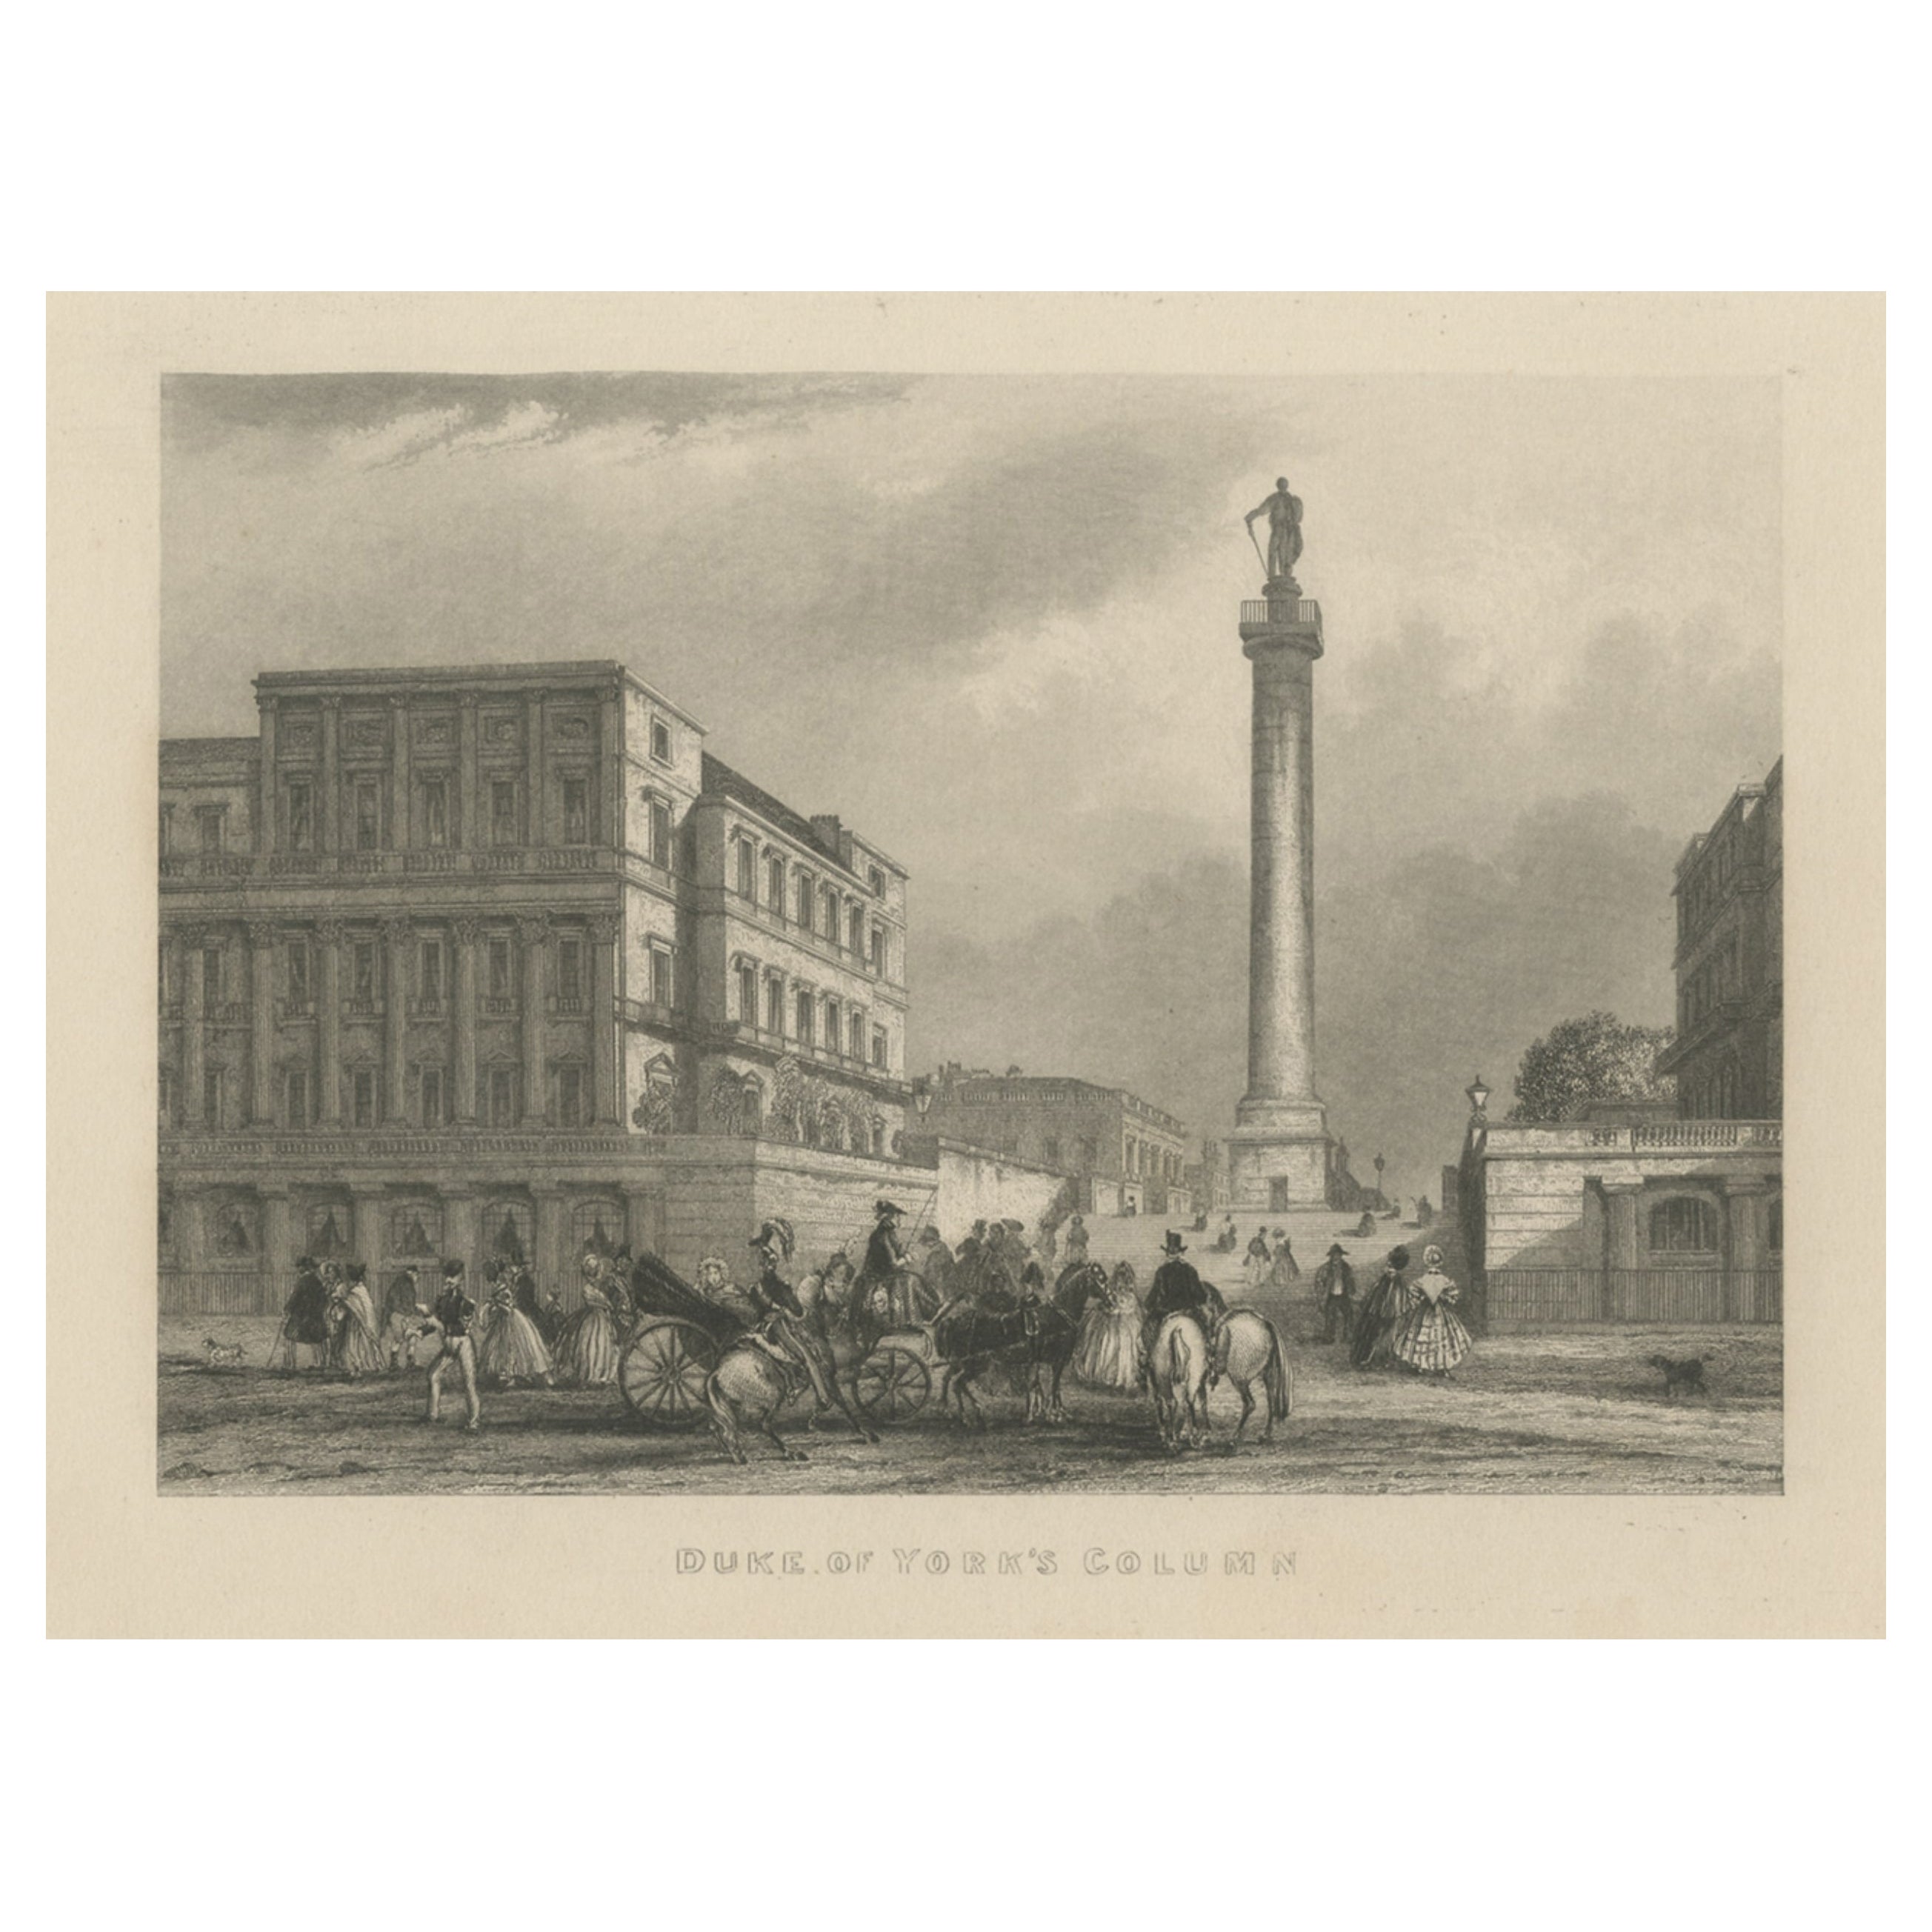 Original Steel Engraved View of the Duke of York Column in London, England, 1840